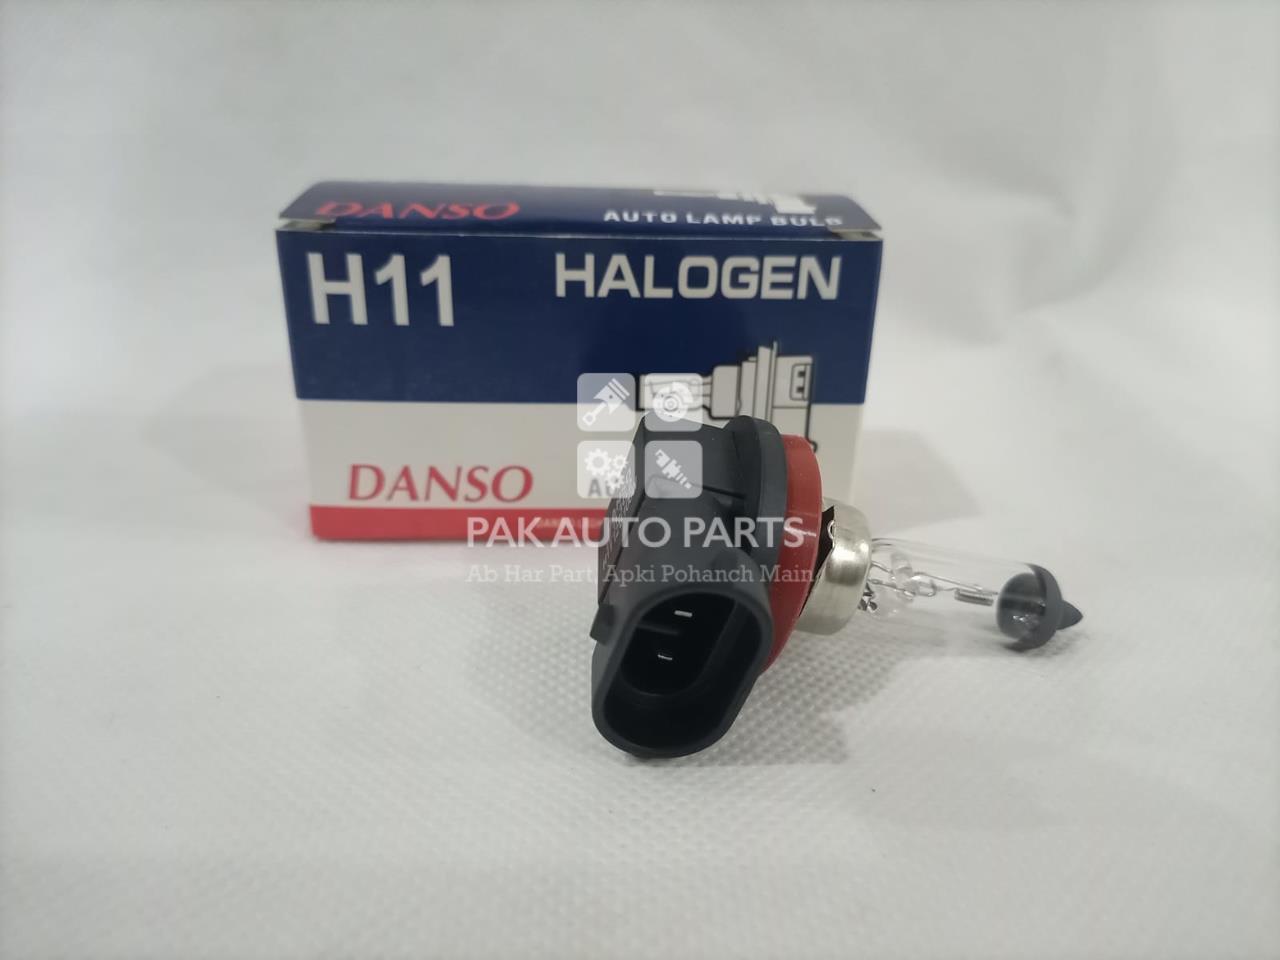 Picture of H4 Halogen Light Car Headlight Bulb